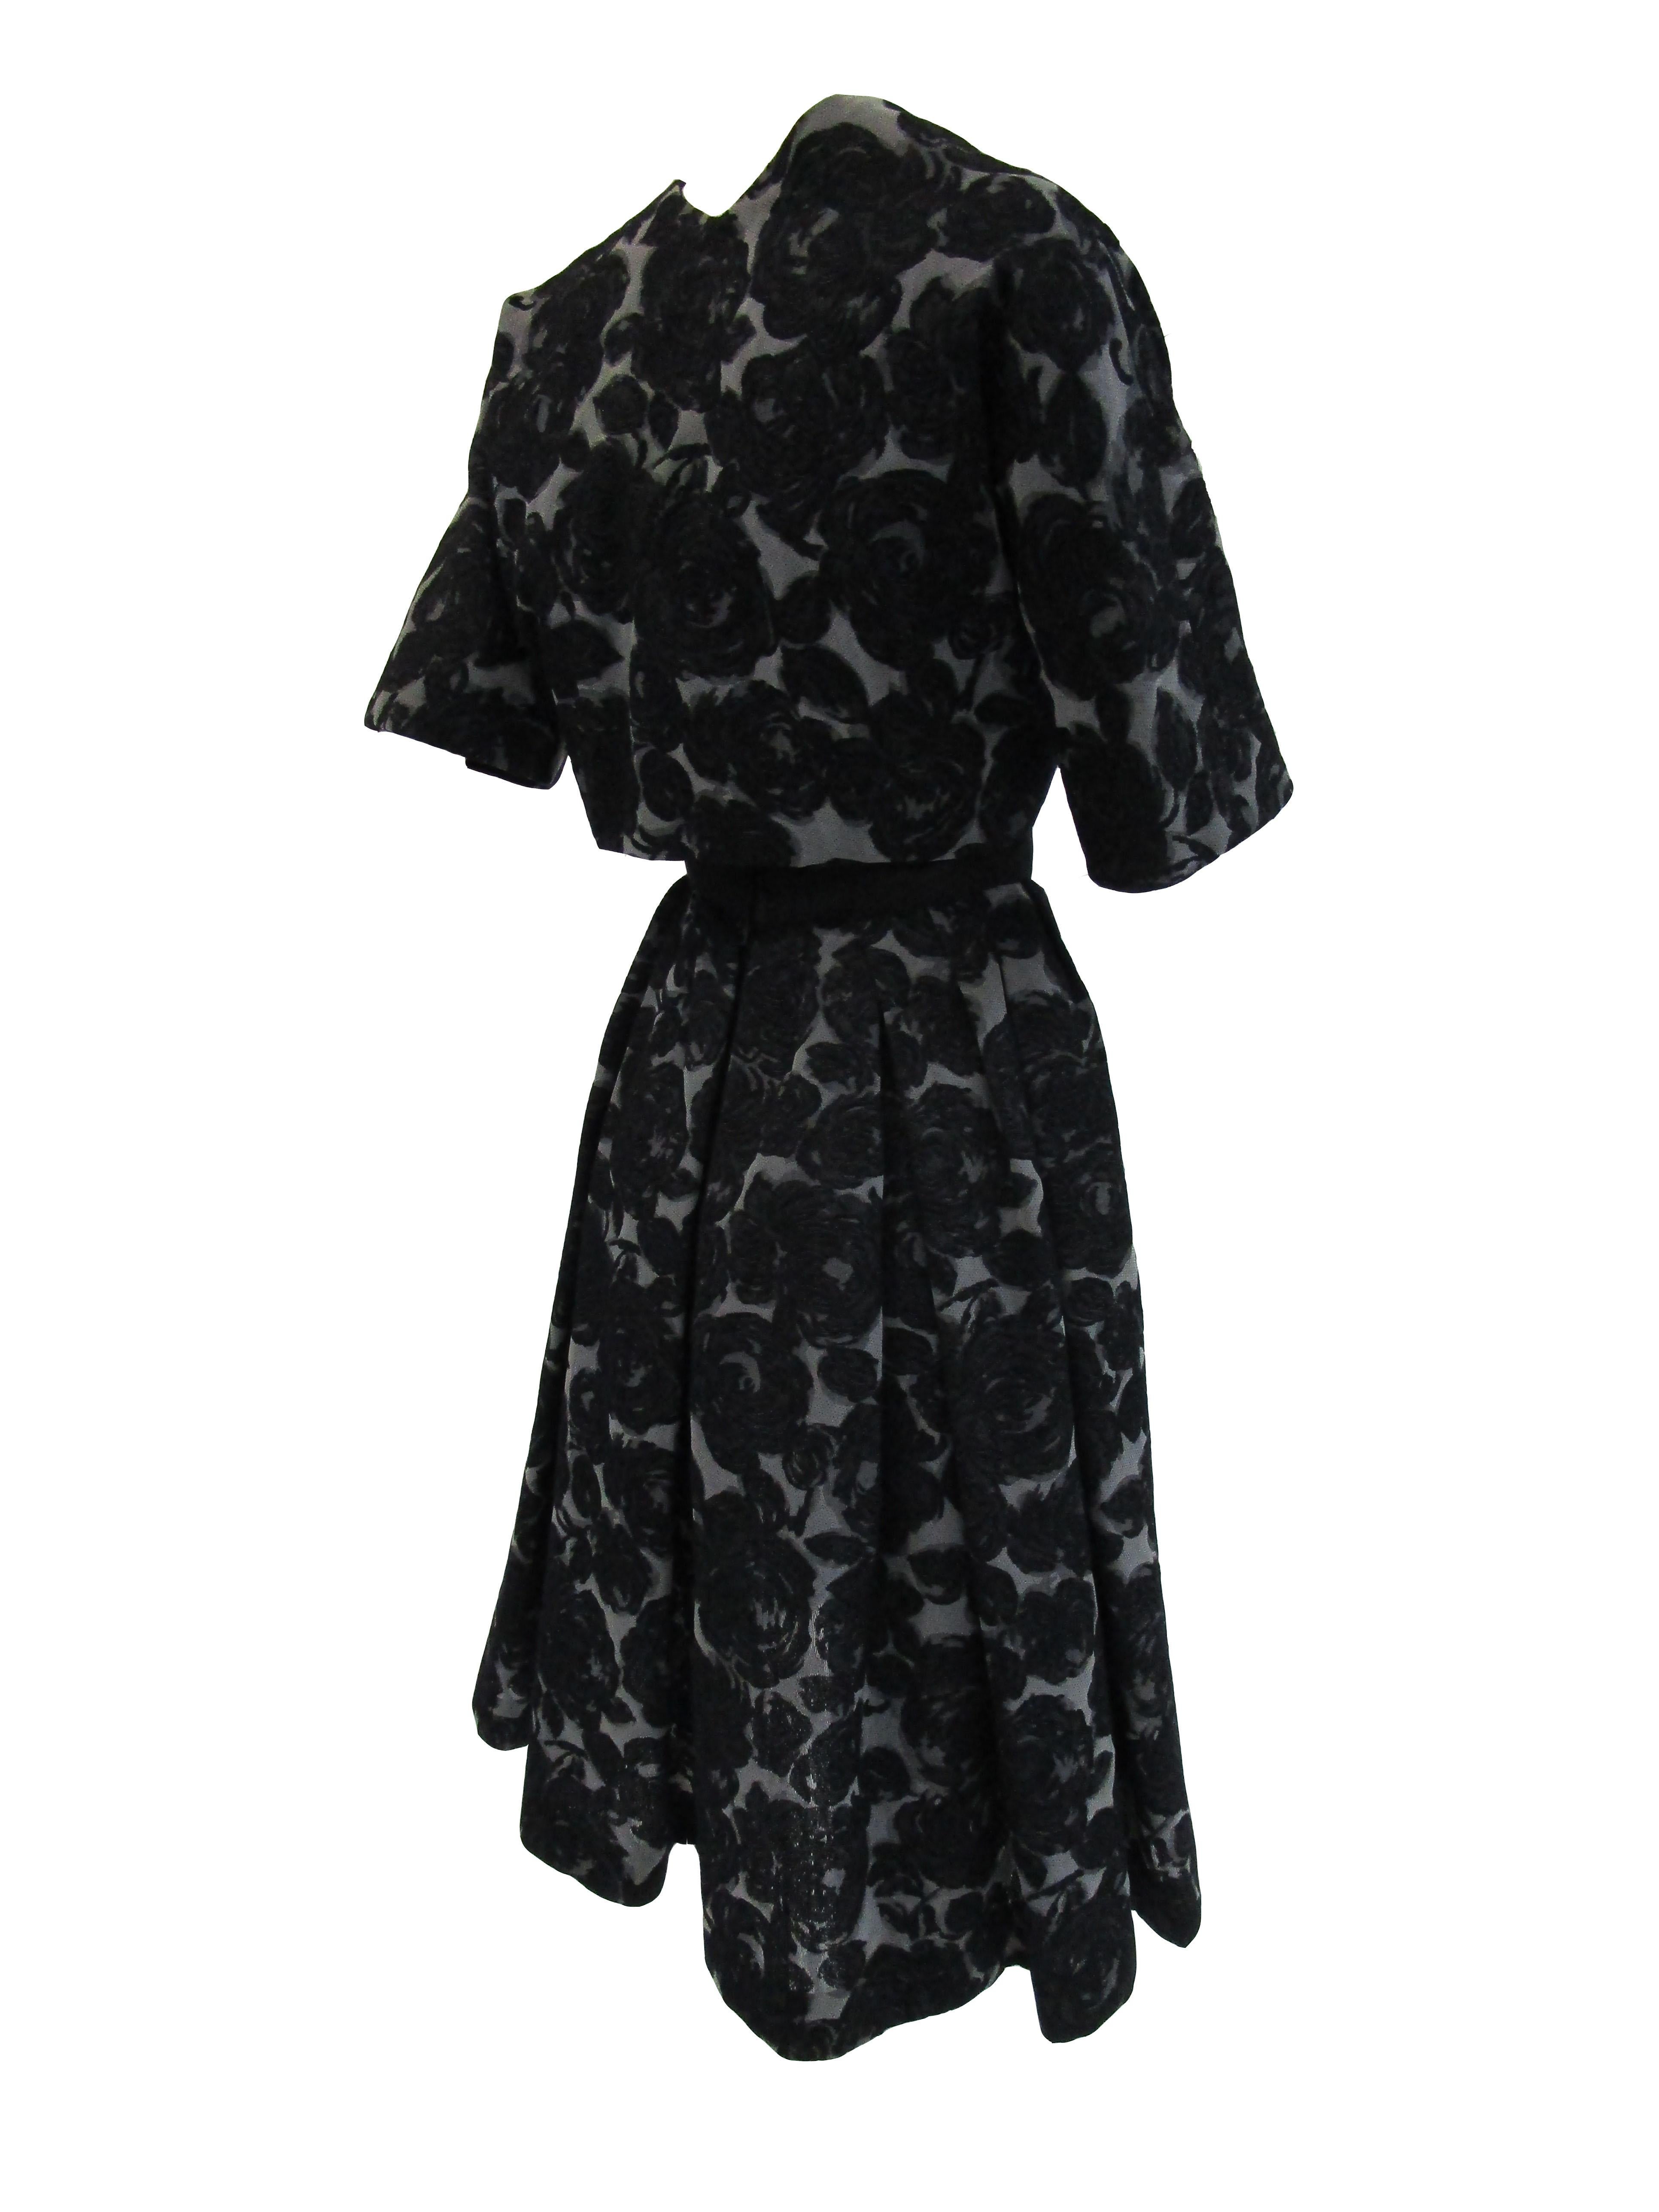 Rare 1950s Madame Gres licensed Black & Grey Embroidered Dress w/ Bolero Jacket For Sale 7